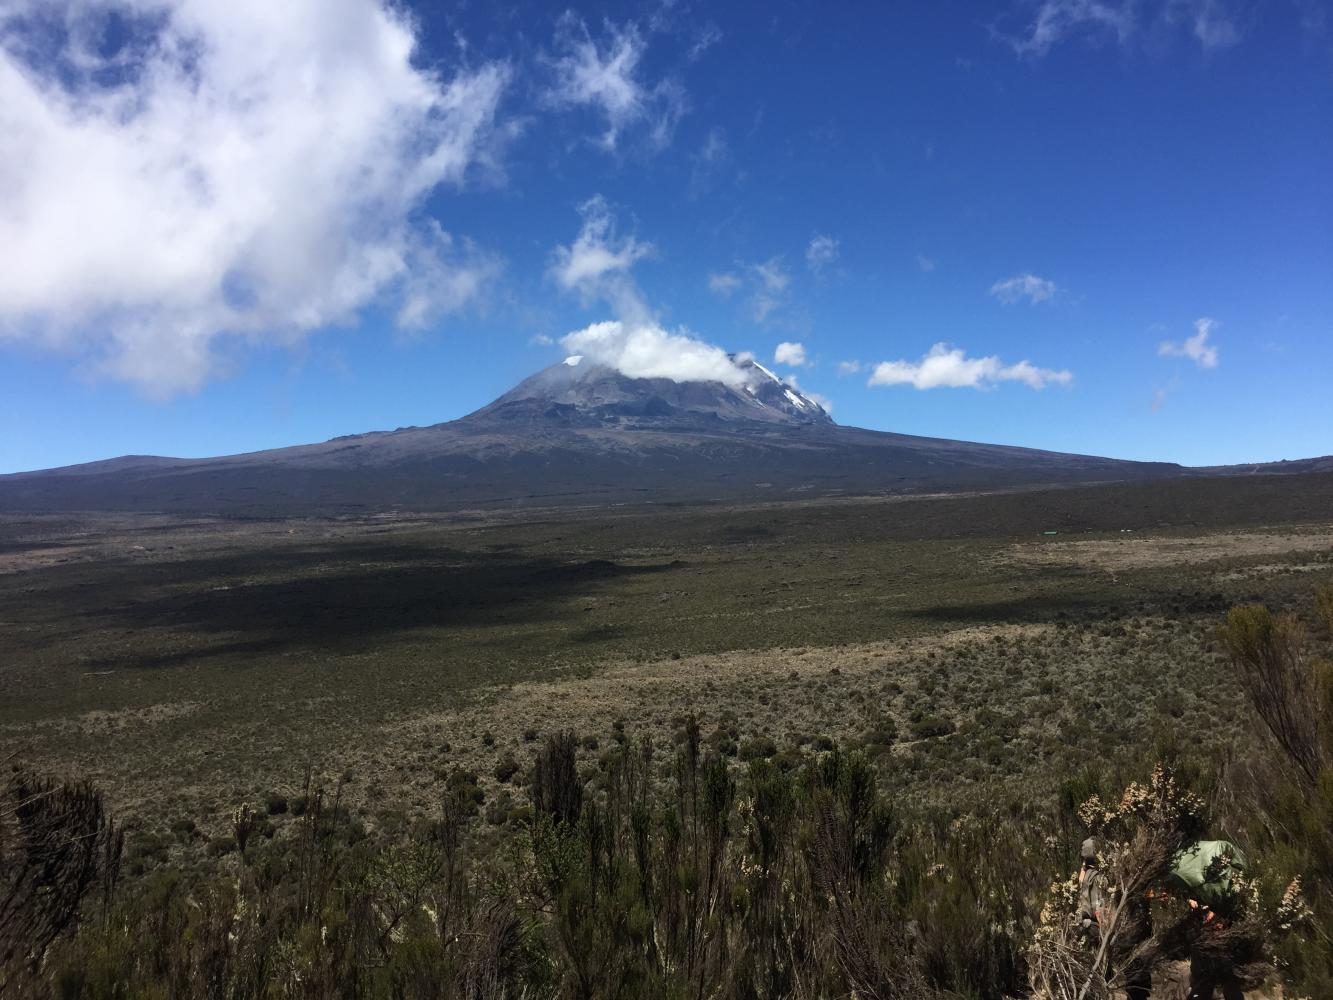 My first glimpse of          Mt. Kilimanjaro